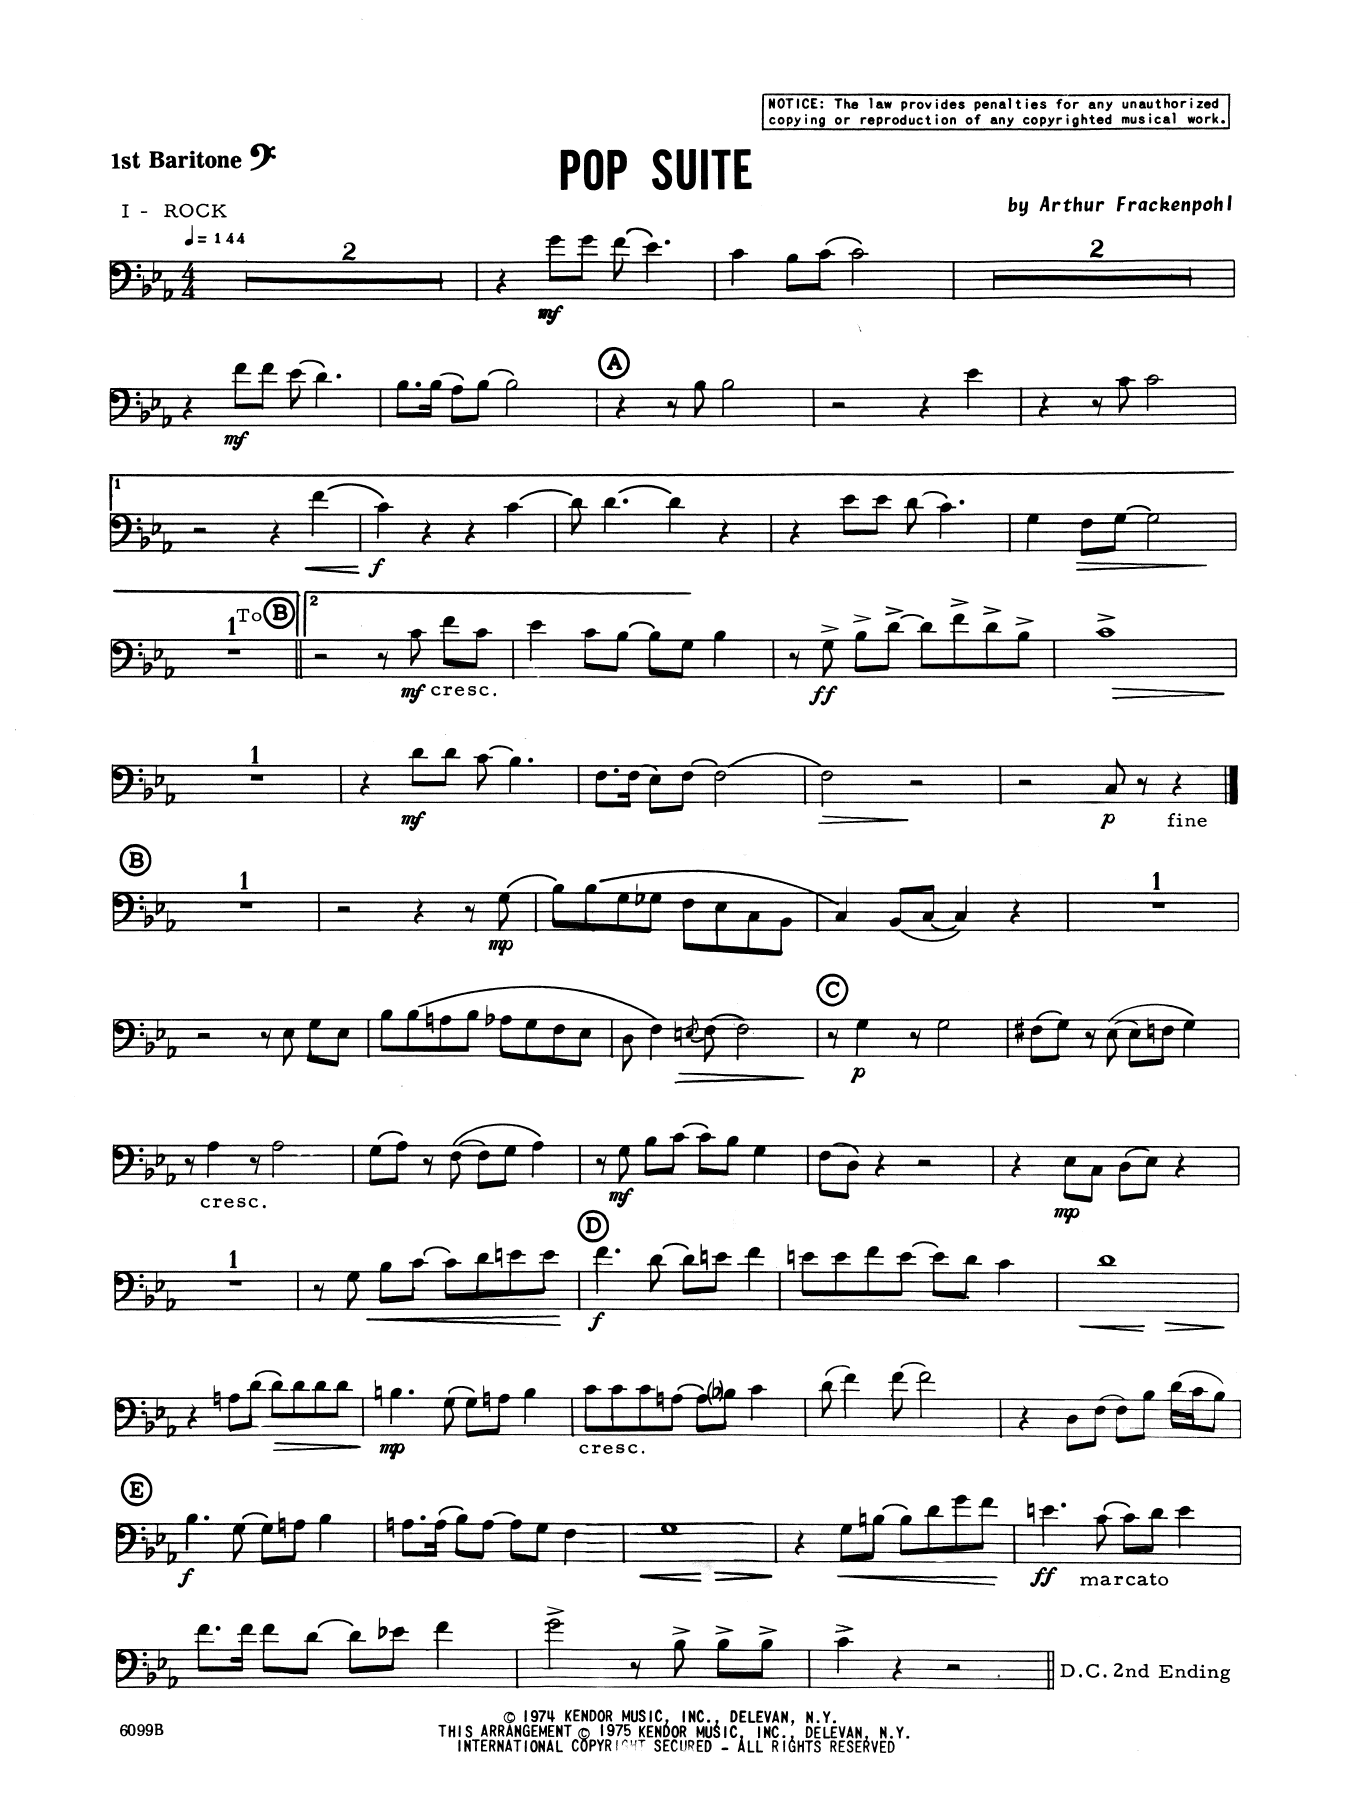 Download Arthur Frackenpohl Pop Suite - 1st Baritone B.C. Sheet Music